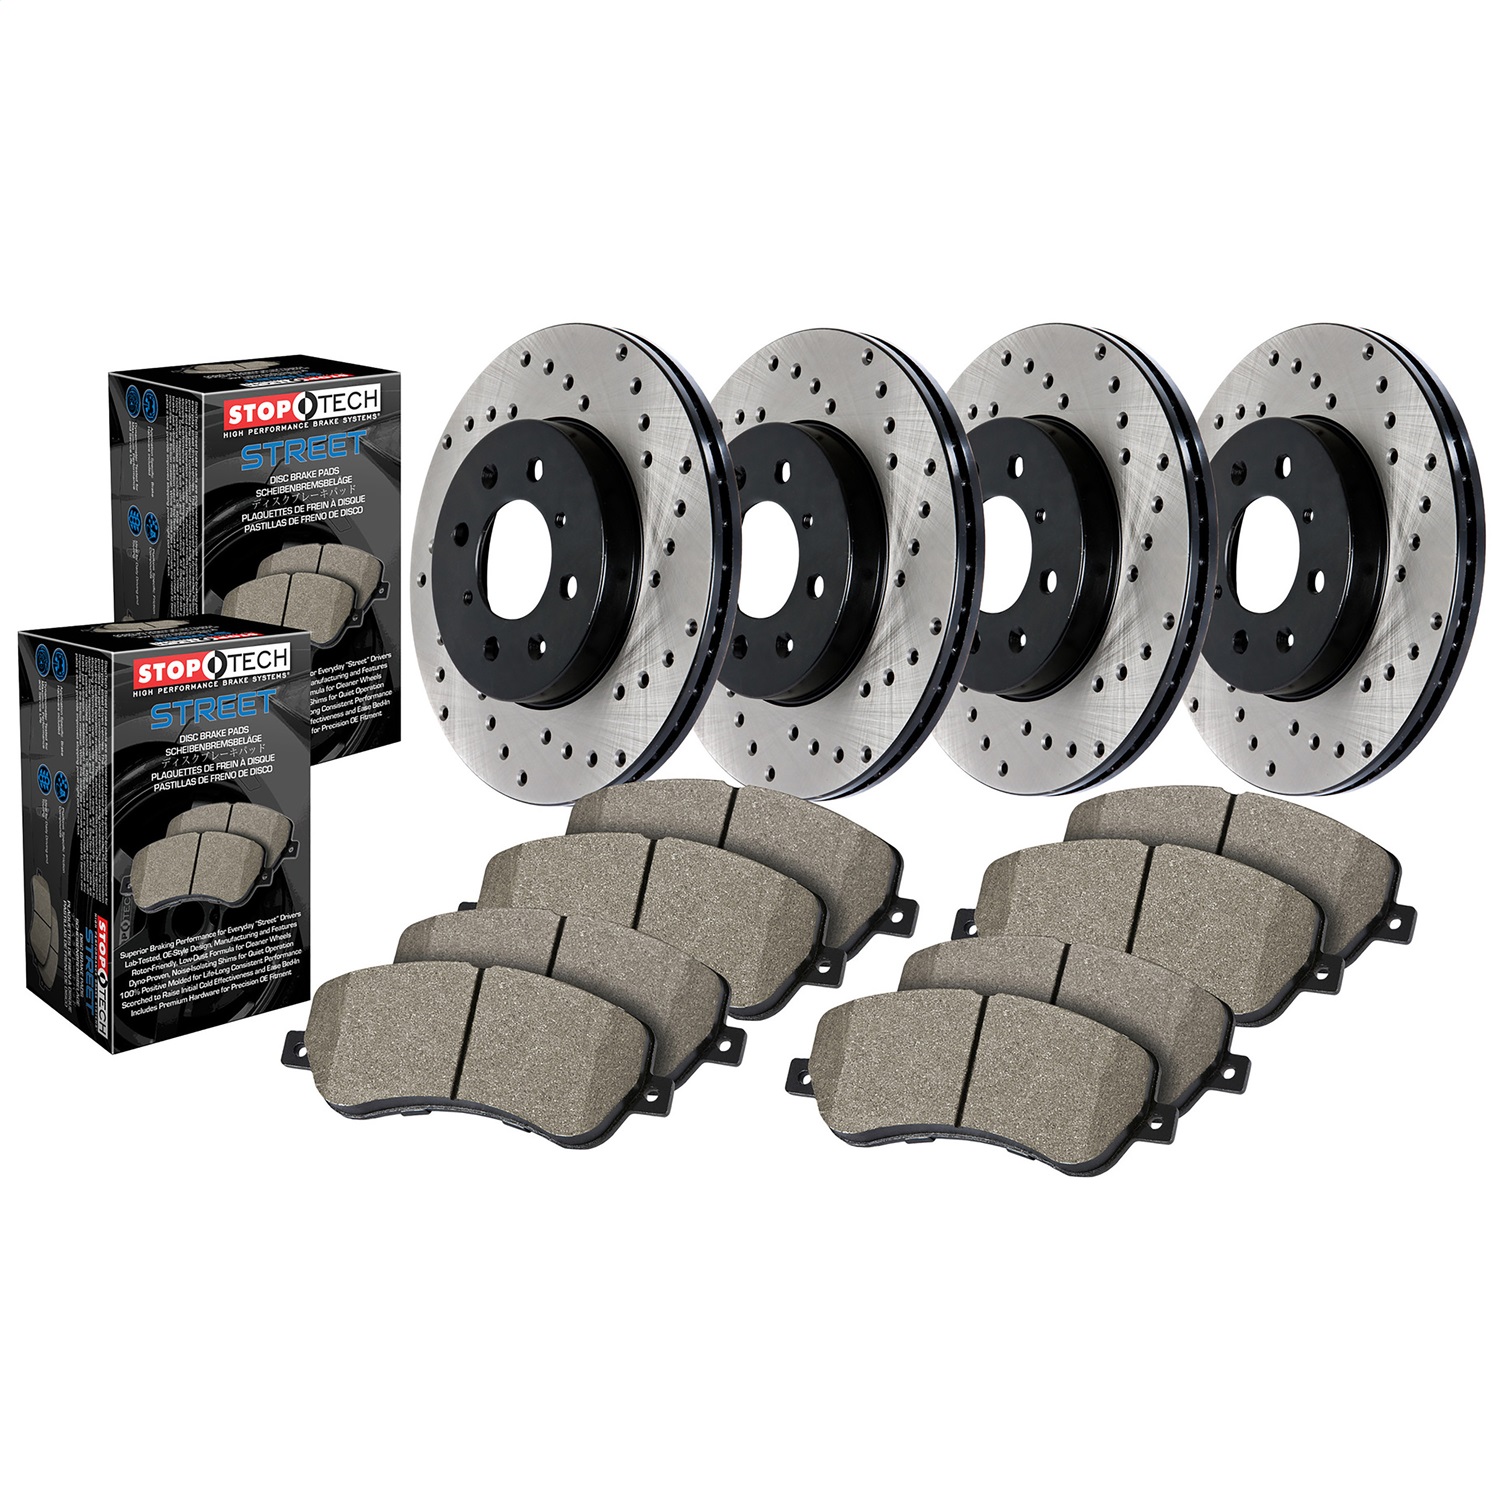 StopTech 936.61079 Street - 4 Wheel Disc Brake Kit w/Cross-Drilled Rotor